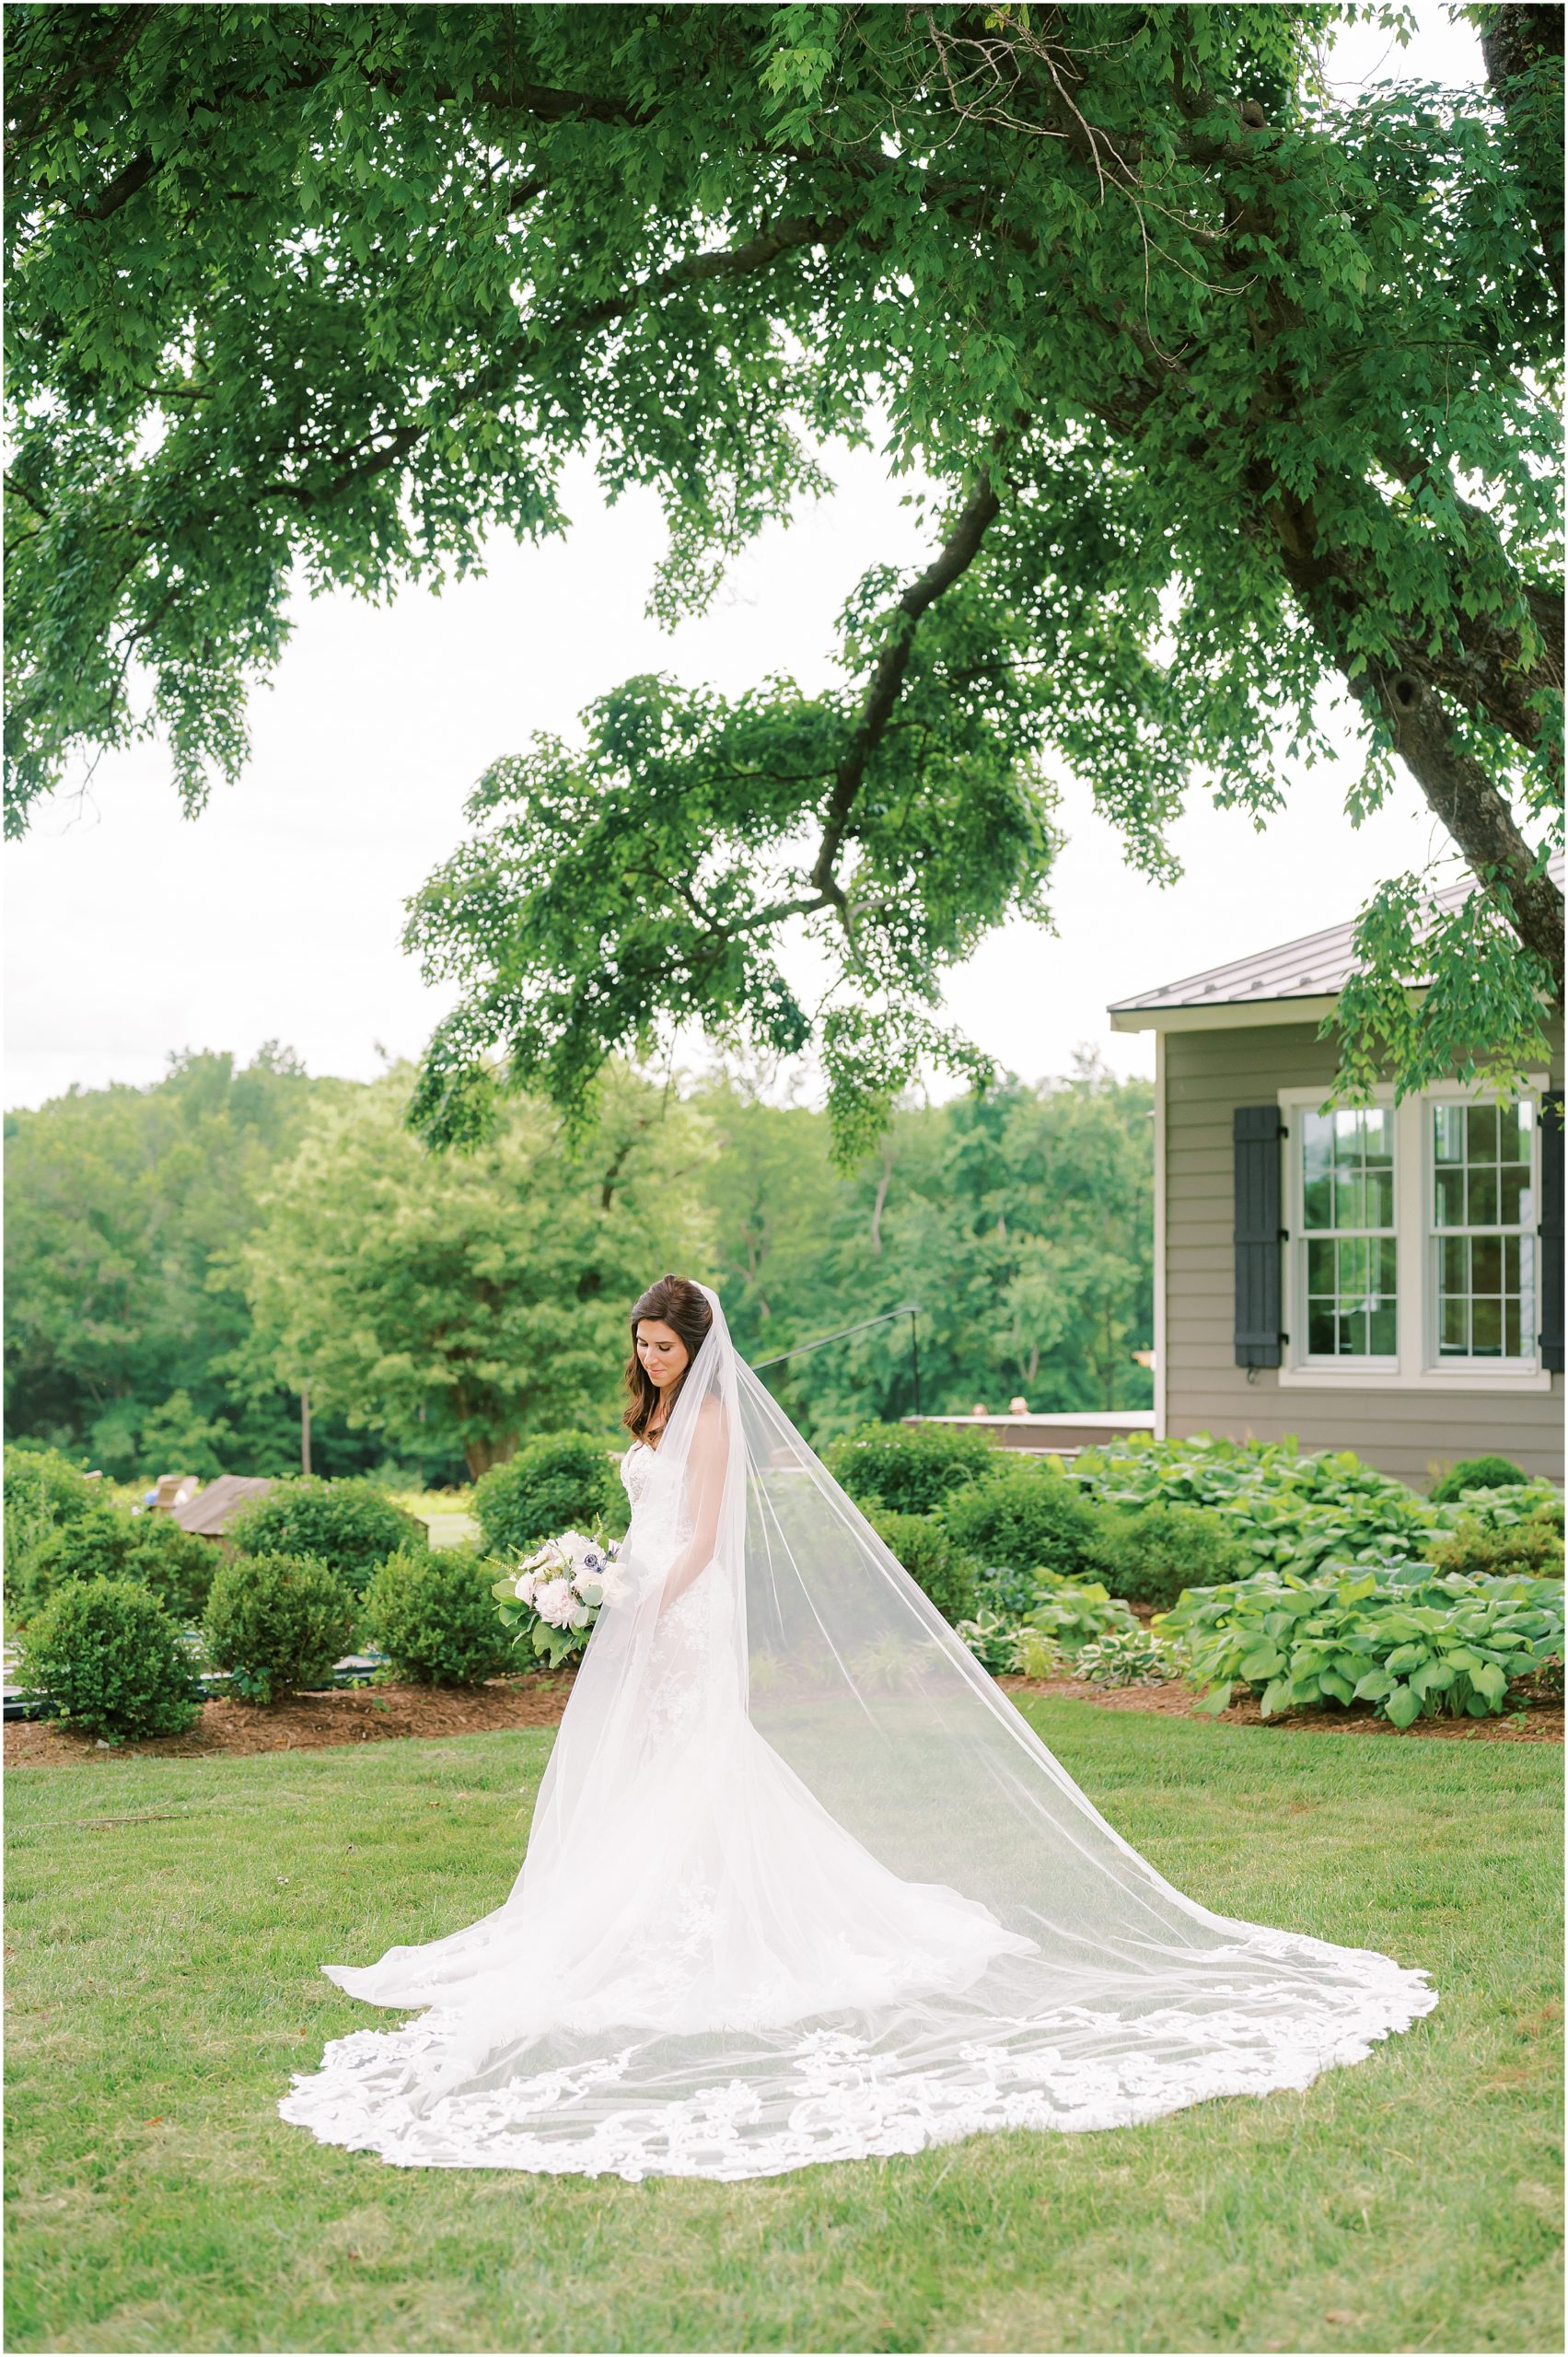 Bride portrait wearing white lace wedding dress with long veil